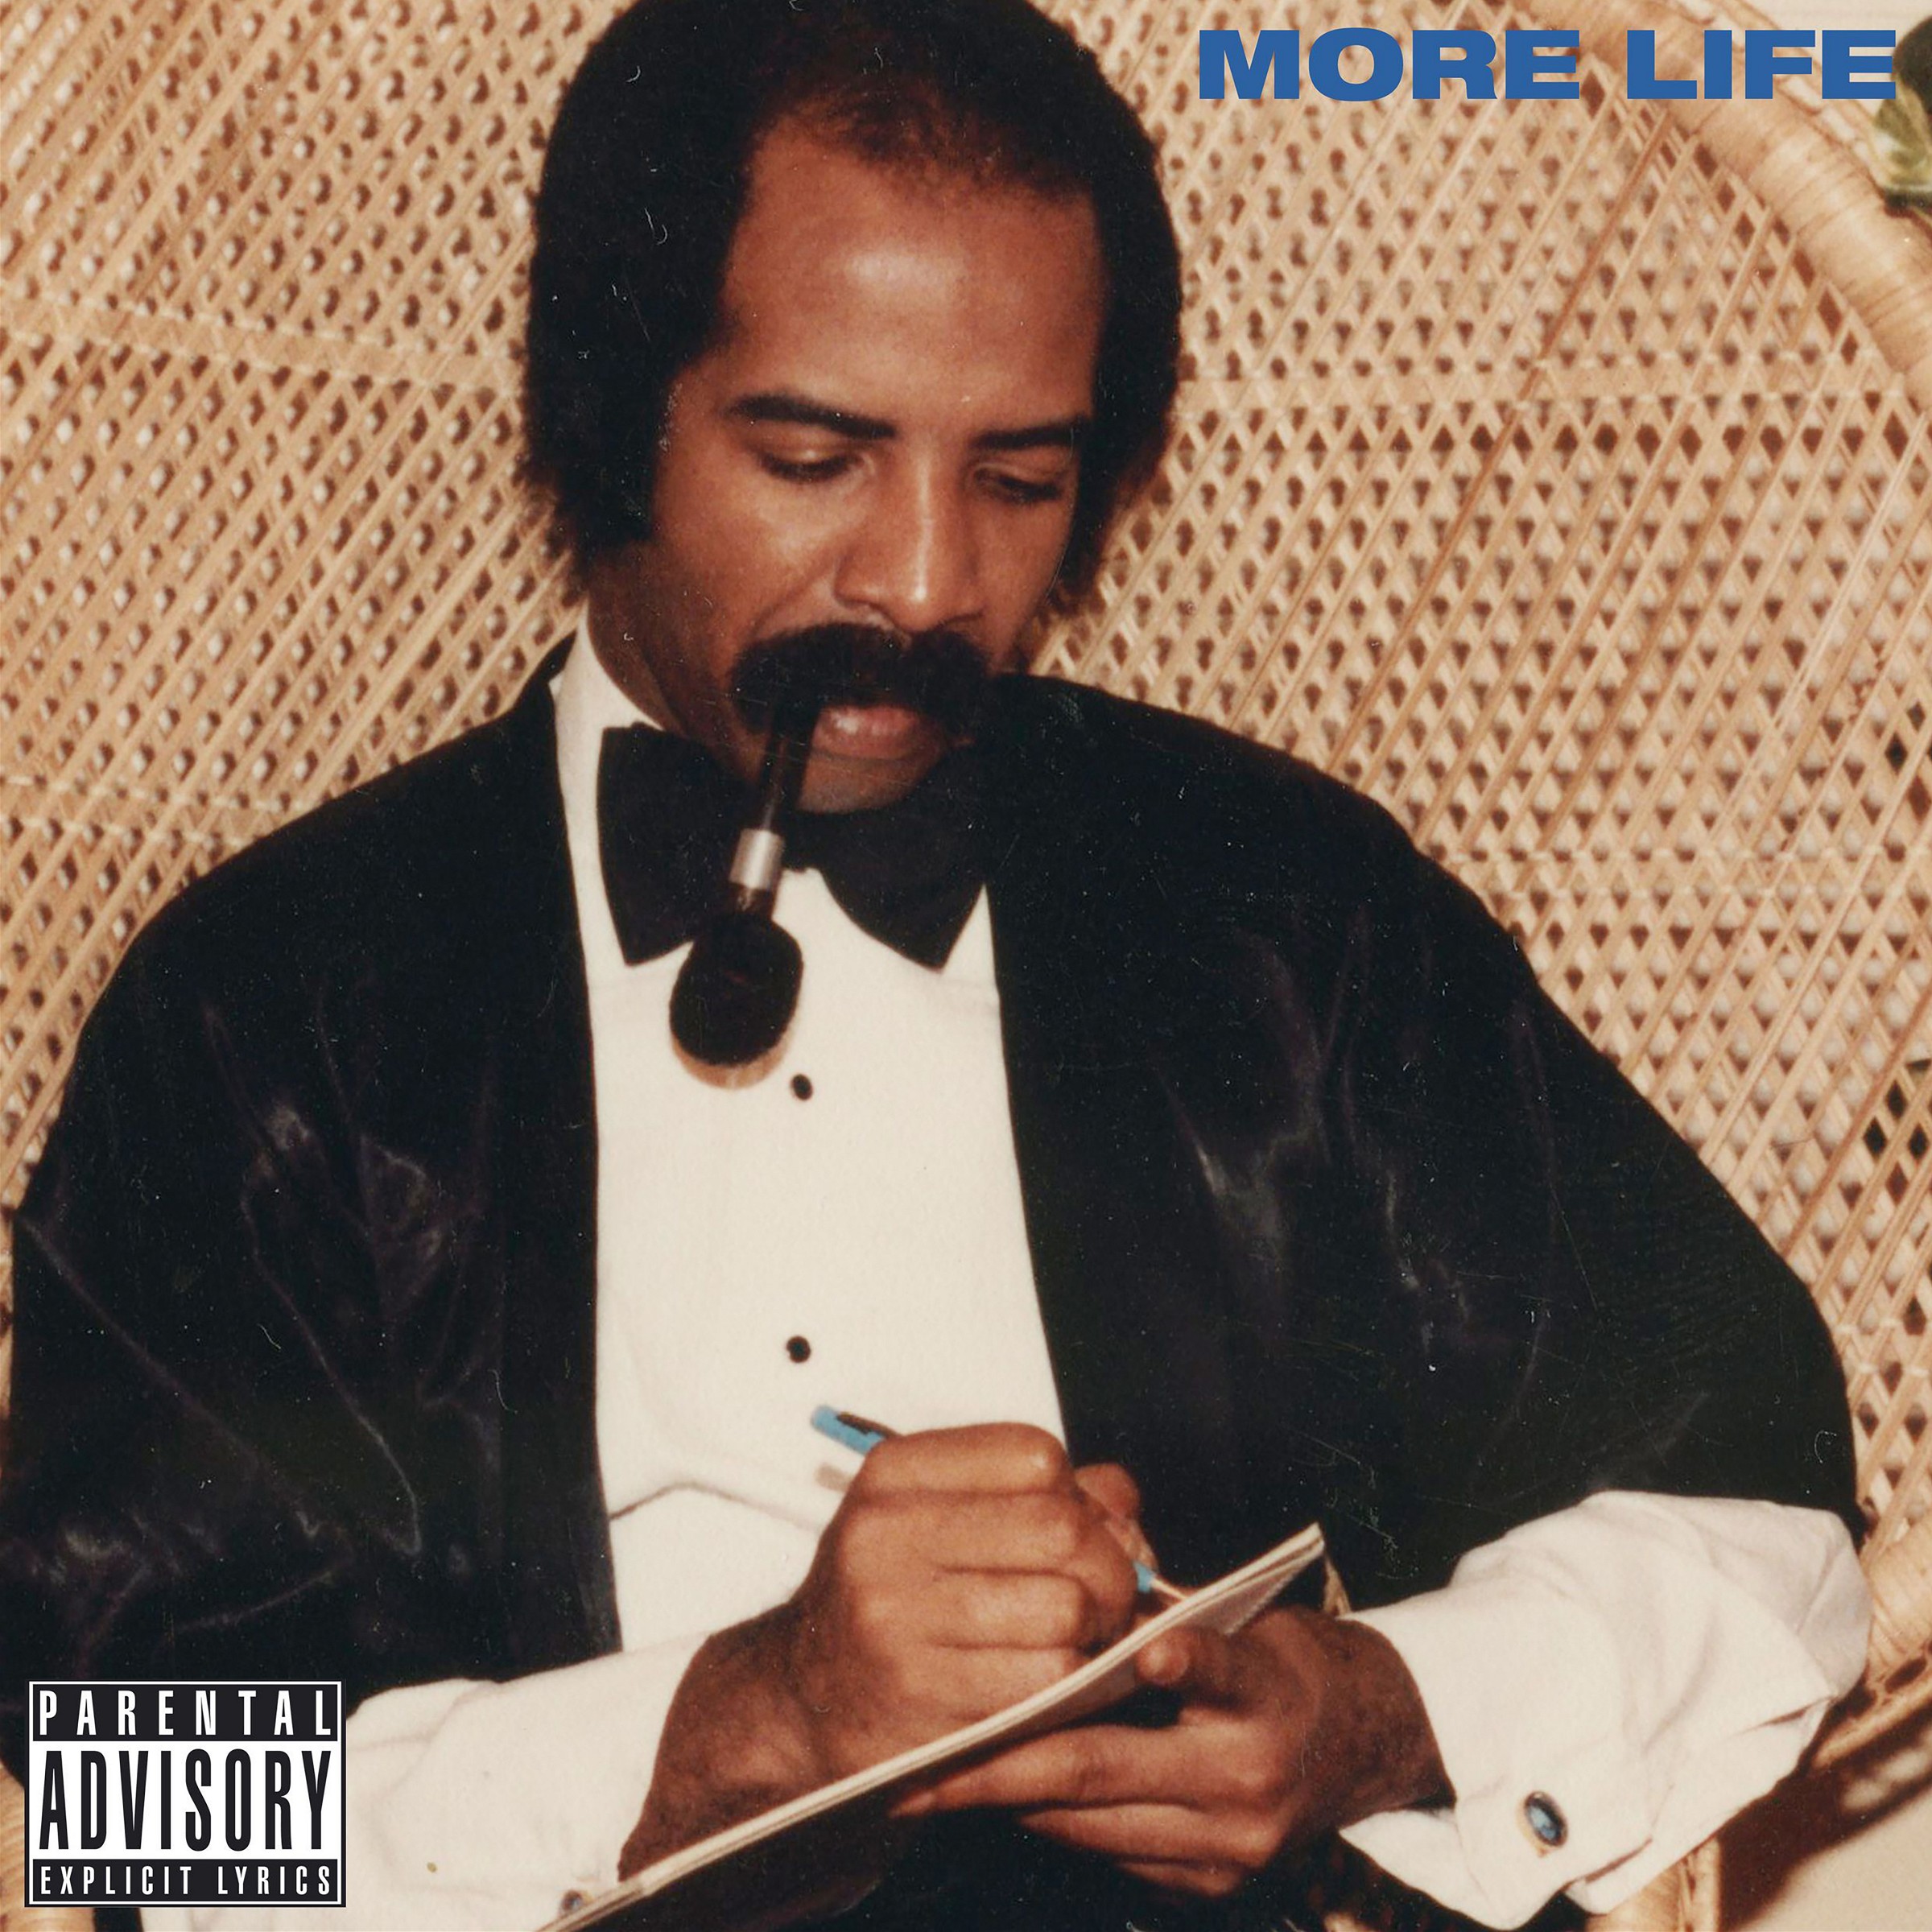 Drake Album Poster, Poster Cover Album More Life Drake